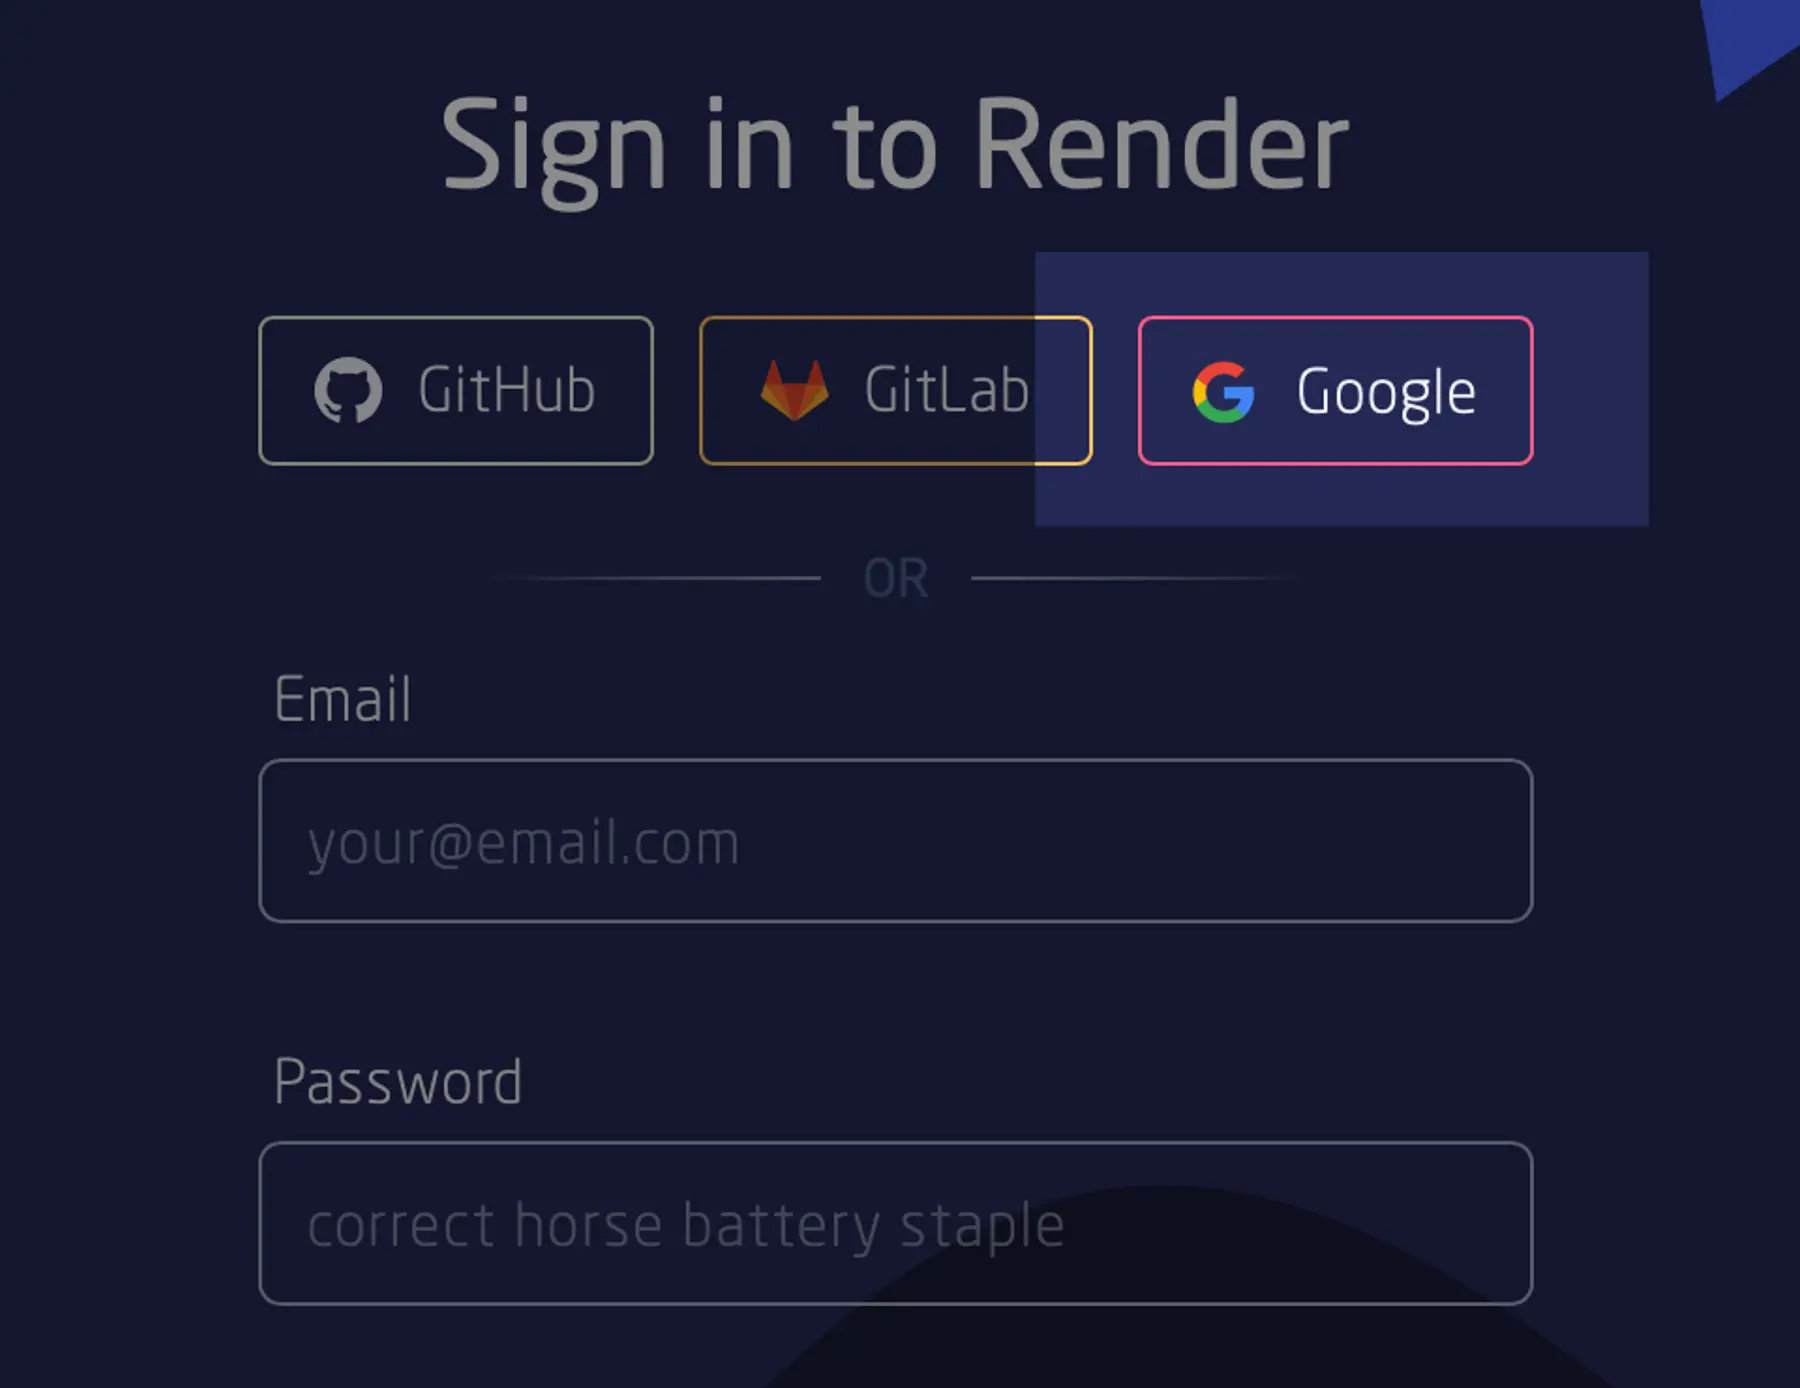 Render's login page